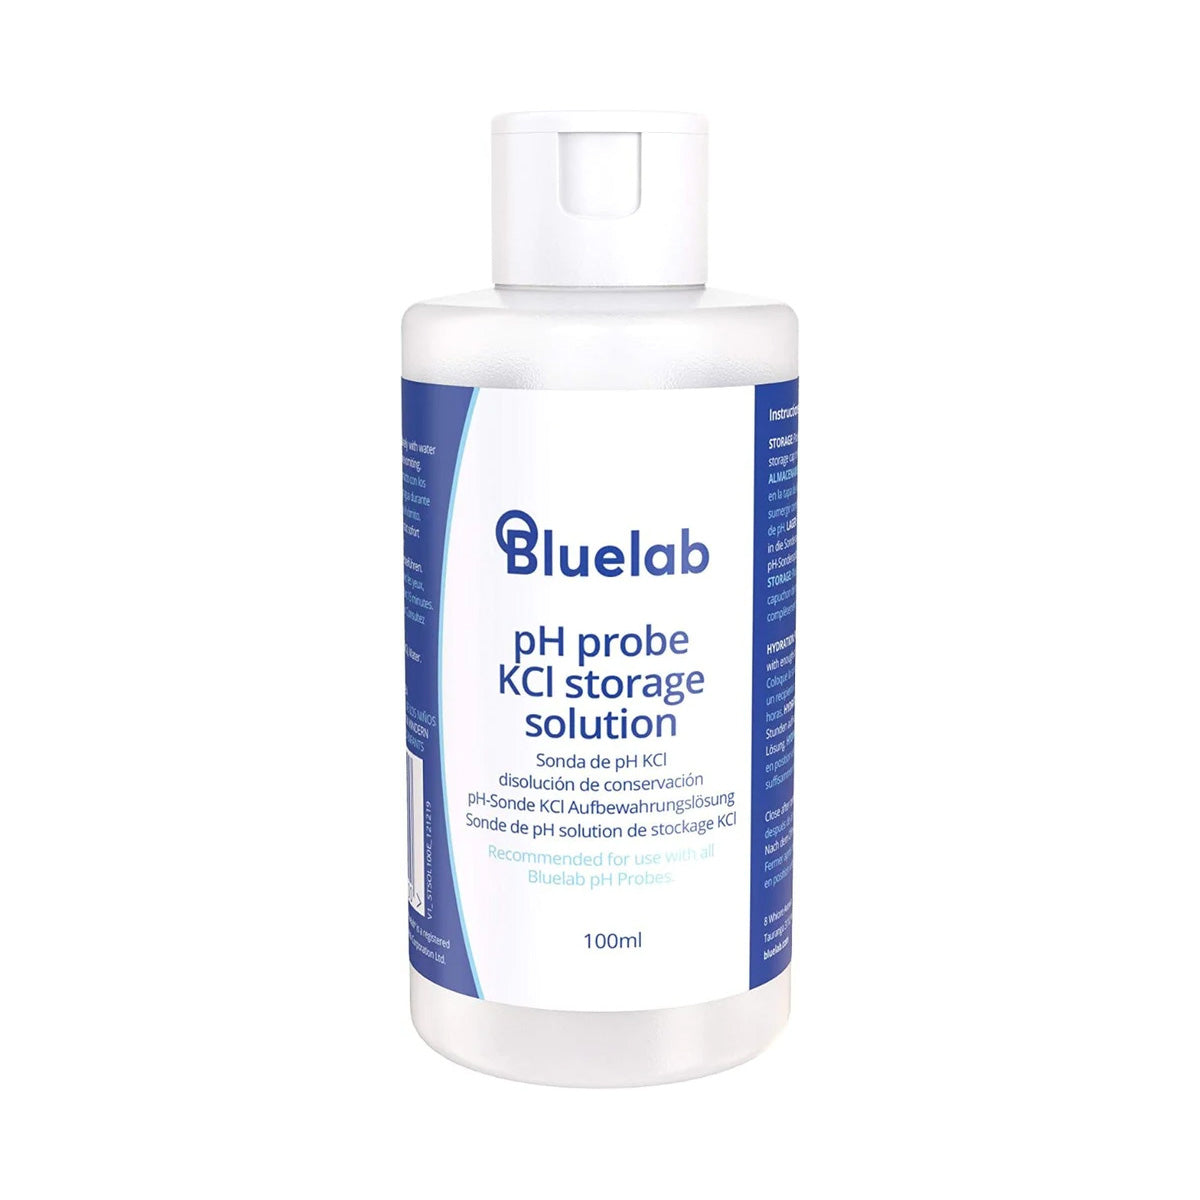 Bluelab - KCl pH Probe Storage Solution